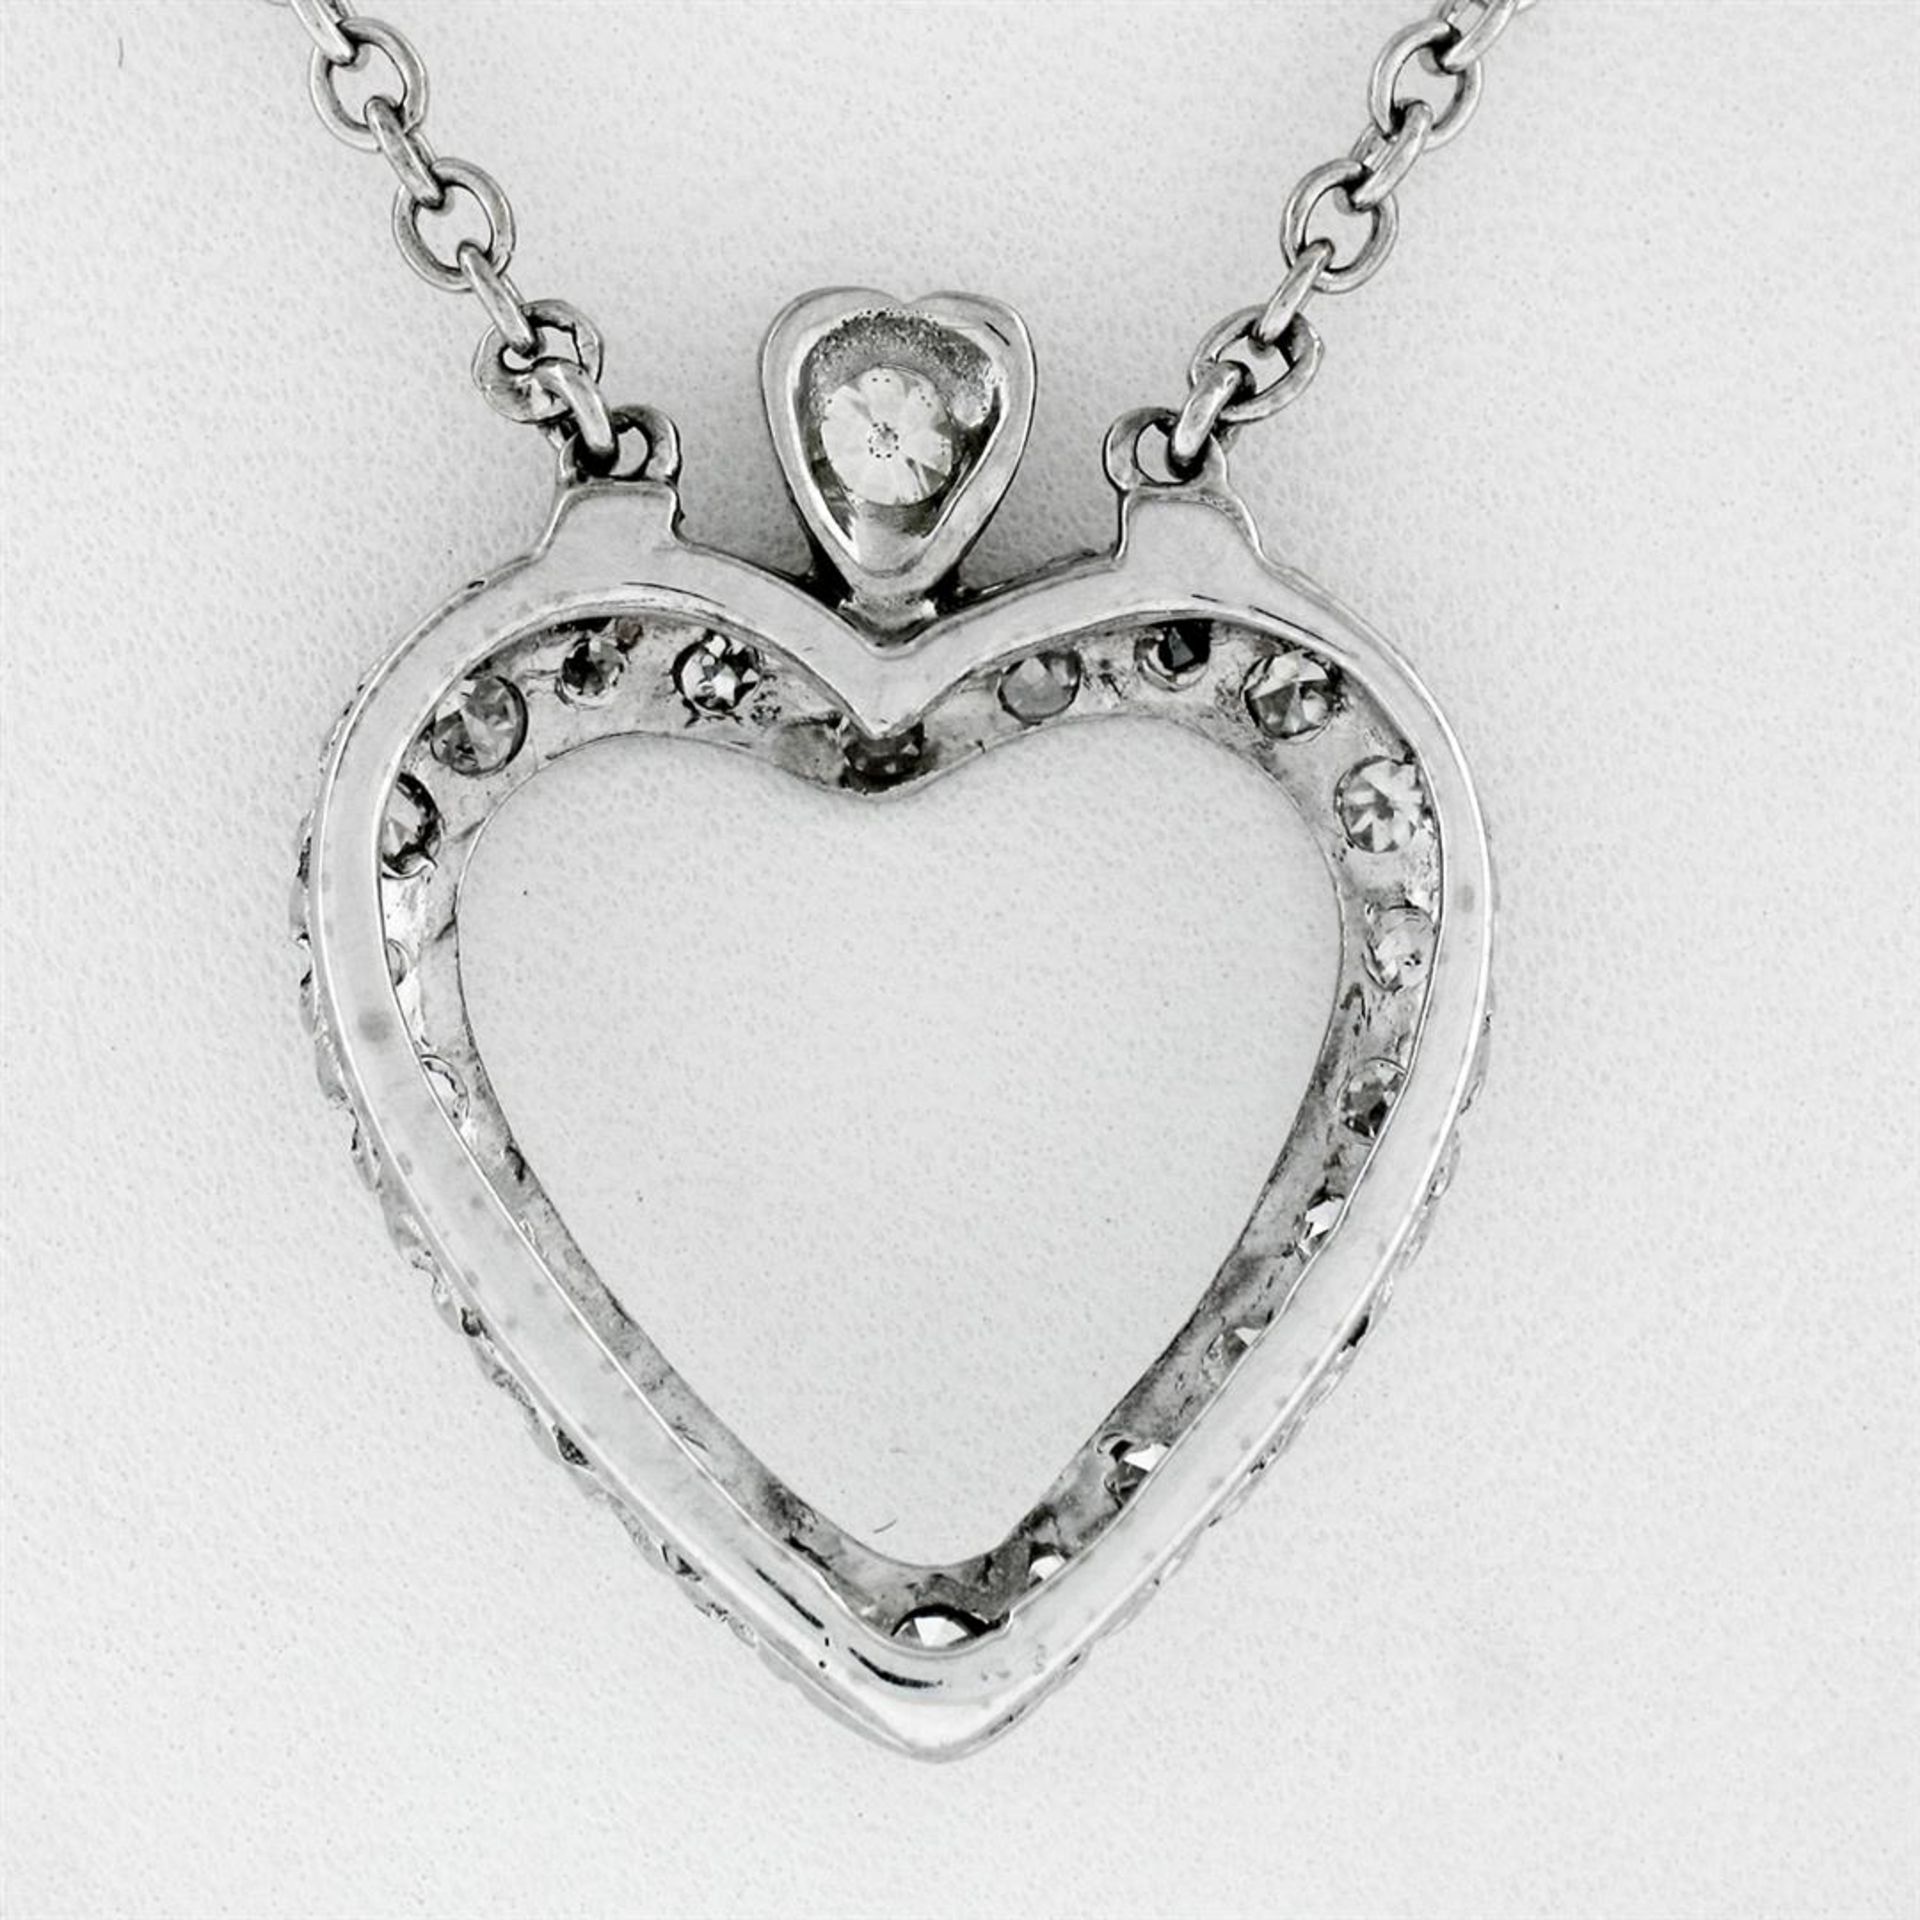 Antique 14k White Gold 1.00ctw Single Cut Diamond Open Heart Pendant Necklace - Image 5 of 6